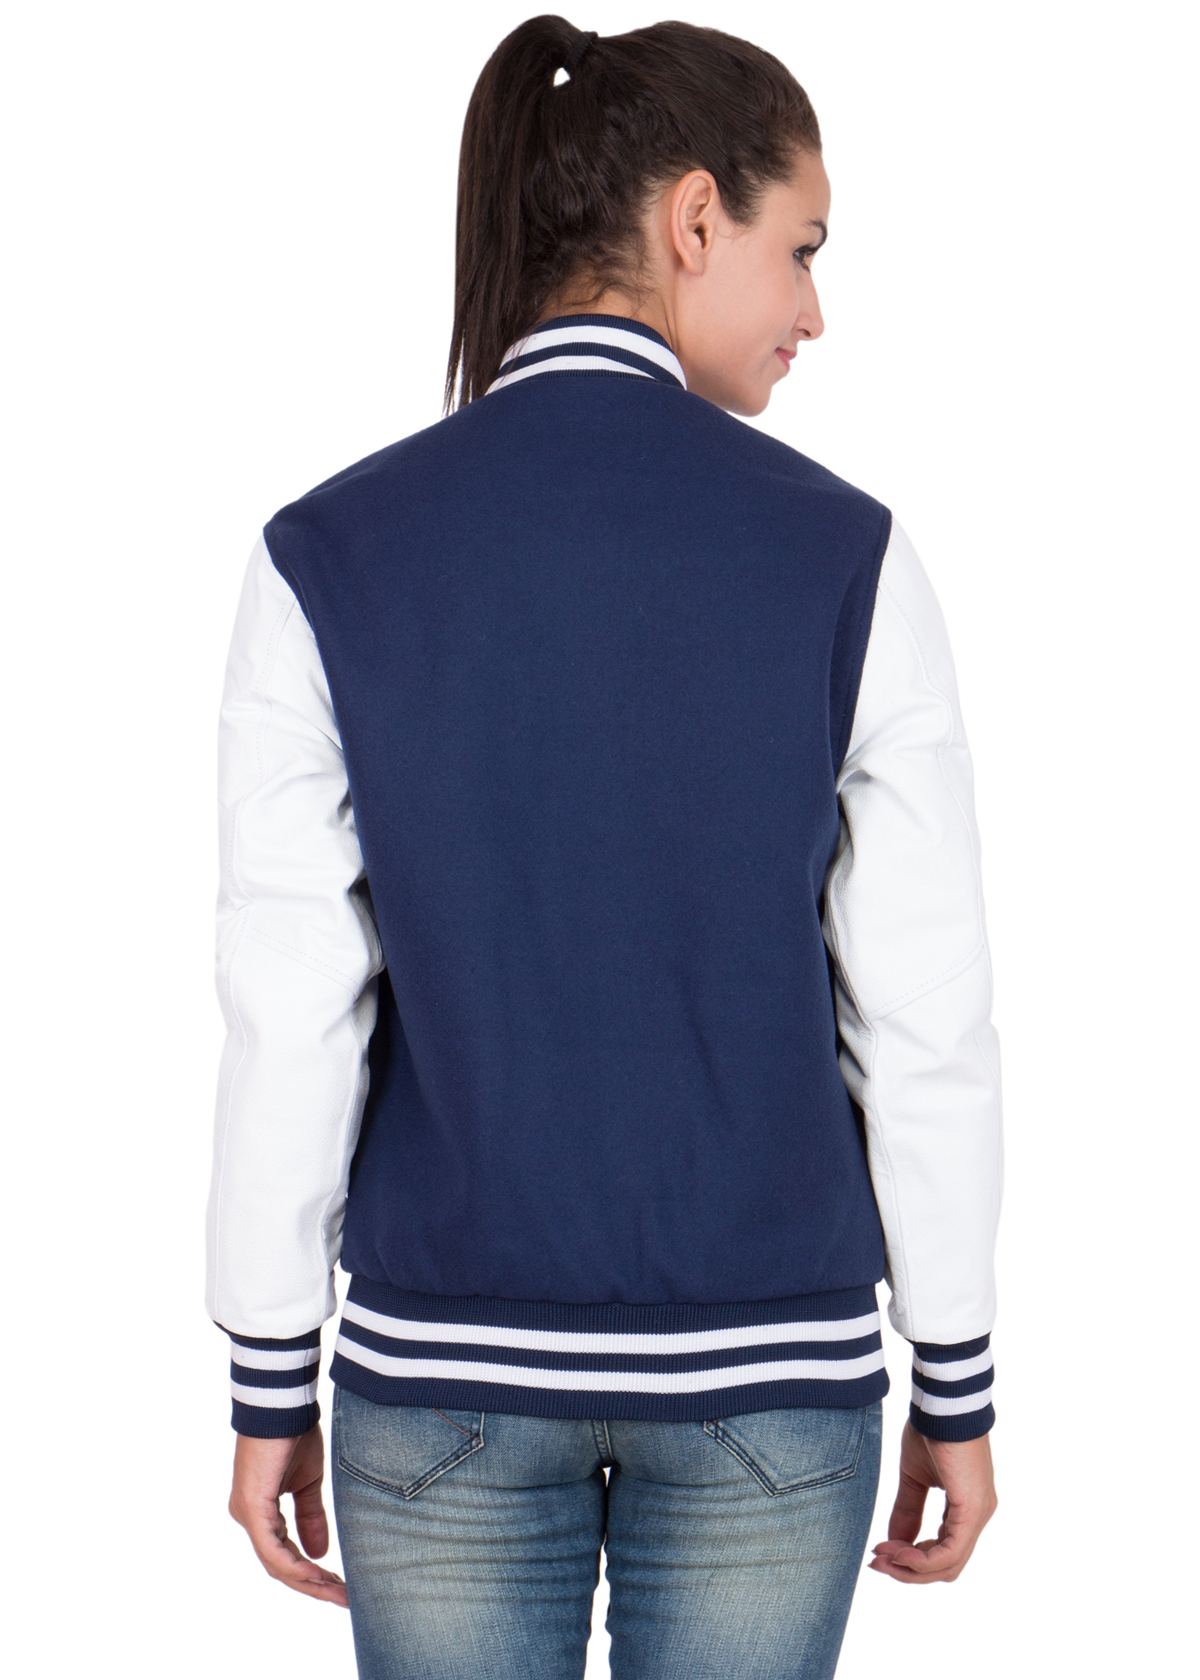 Women's Varsity Jacket for Baseball Letterman Bomber of Royal Blue Wool and  Genuine White Leather Sleeves (XXS, Royal Blue) at  Women's Coats Shop